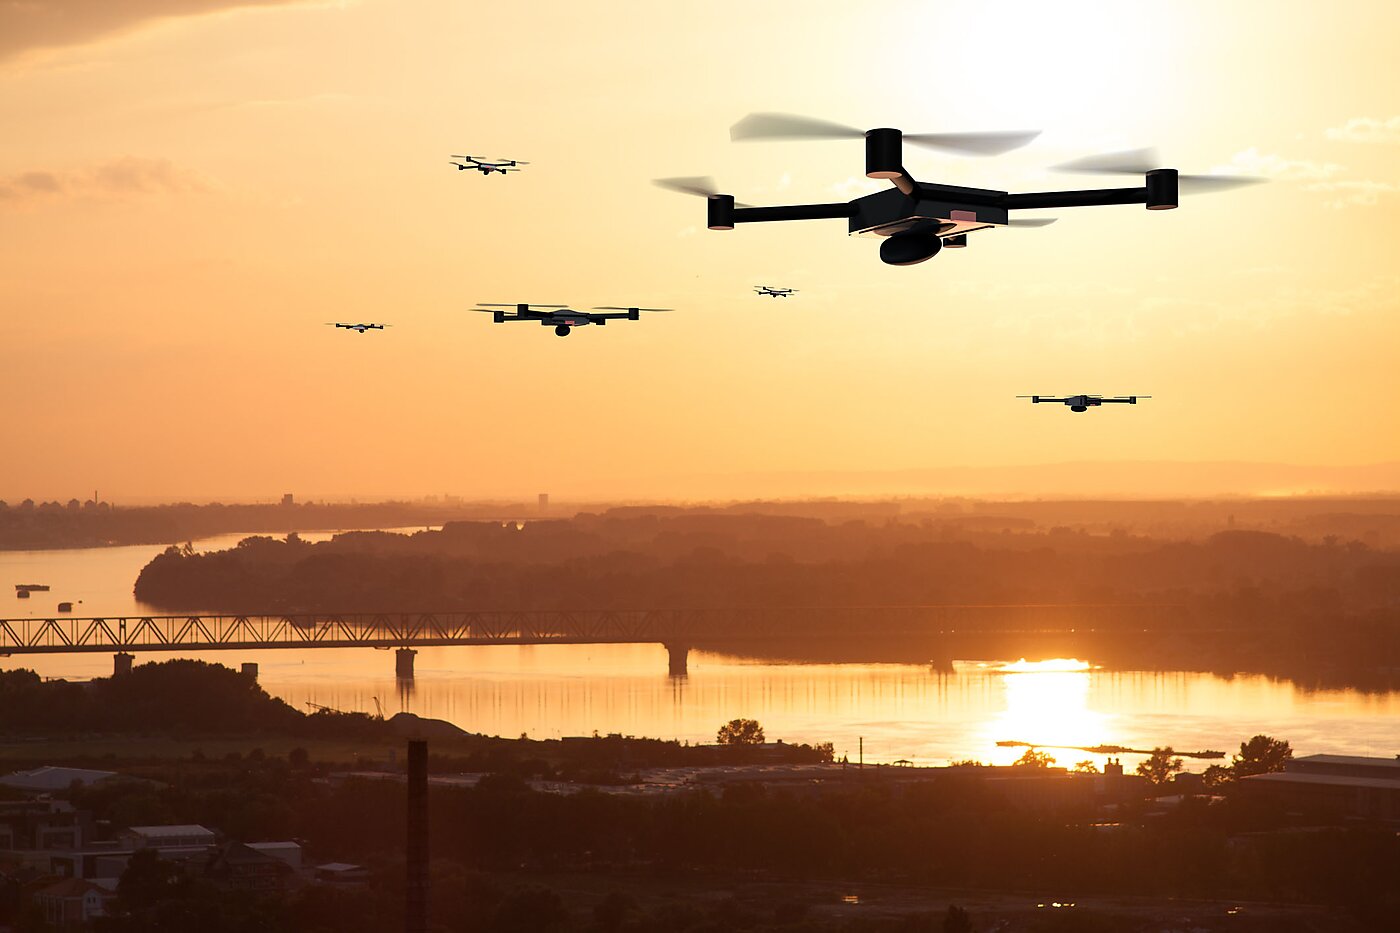 Drones in sunset sky.